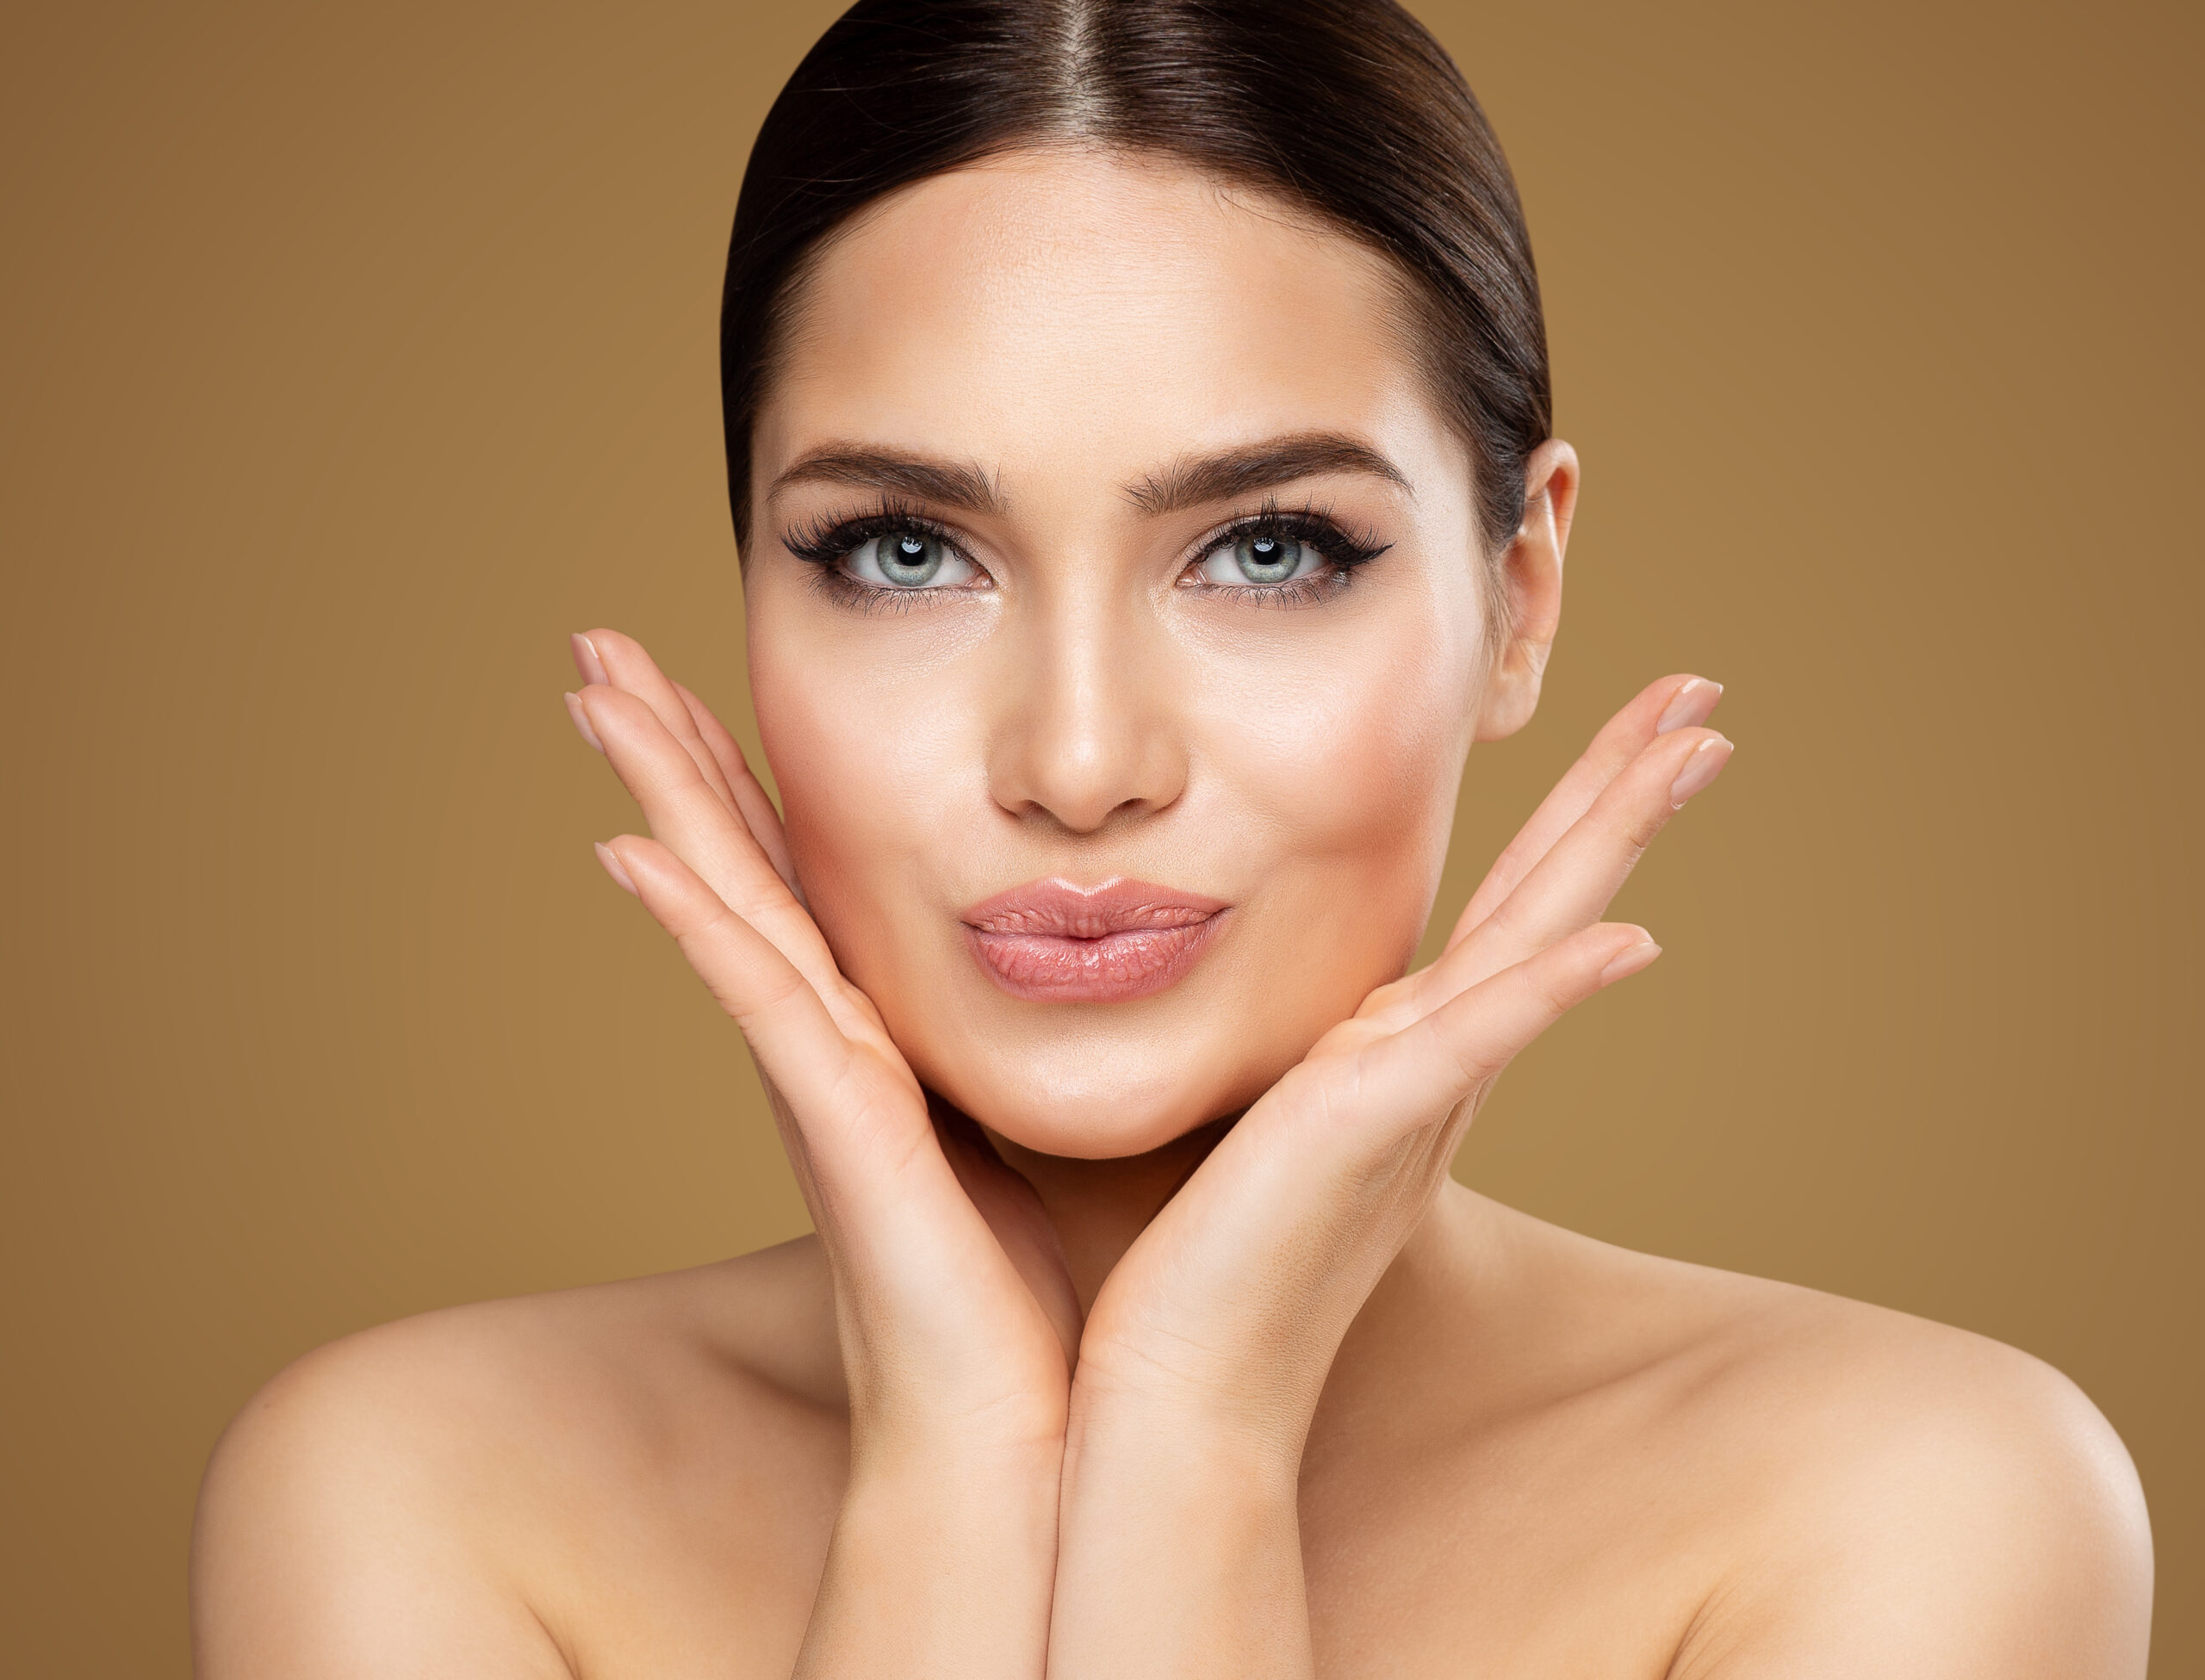 Beauty Model Showing Cheekbones and Full Lips | Avail Aesthetics in North Carolina